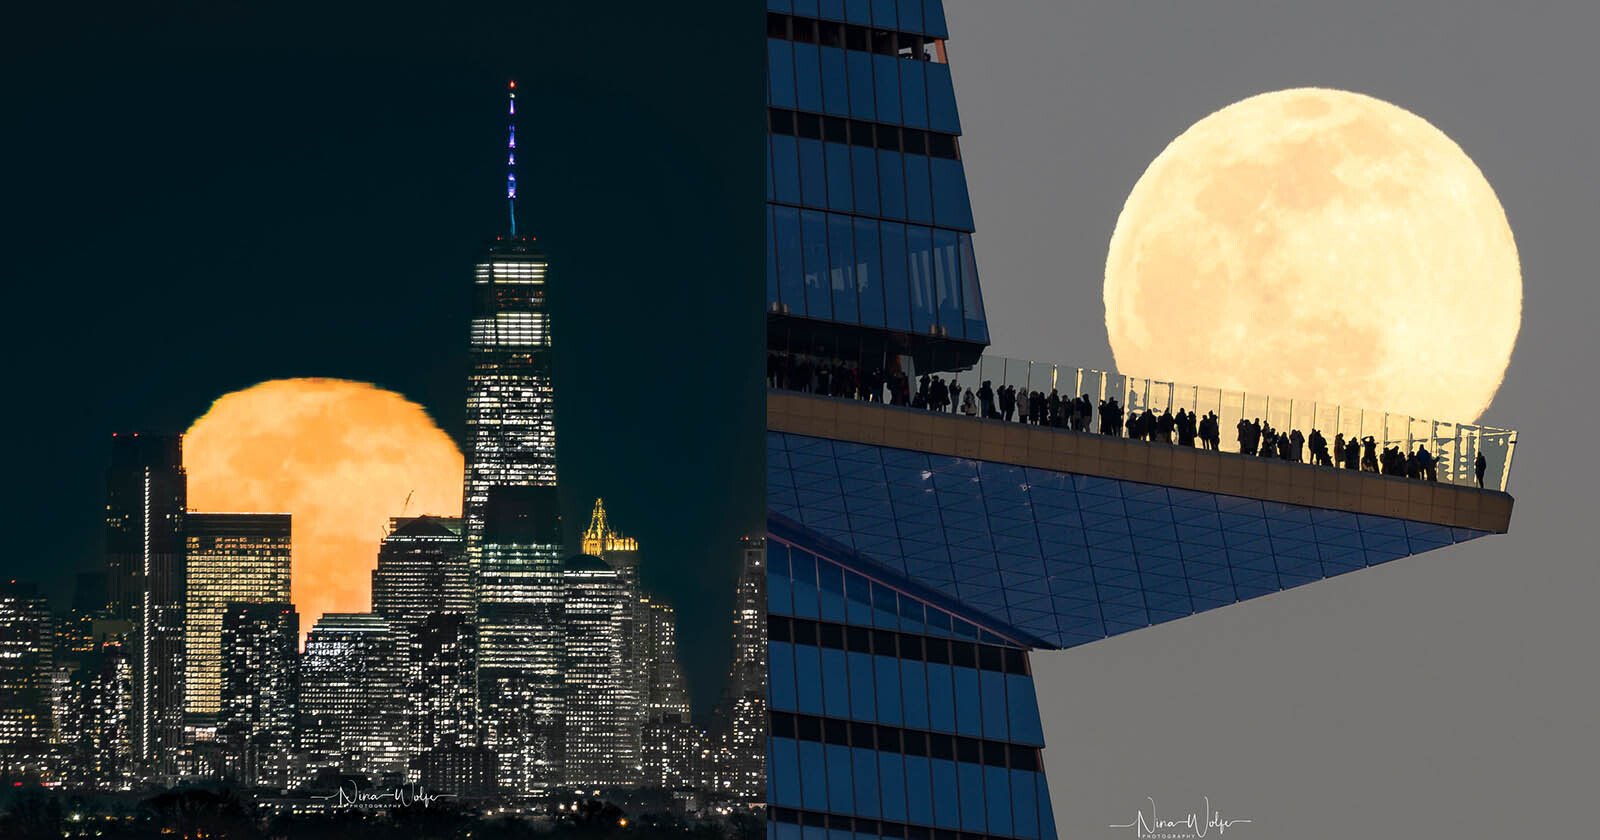 Photographer’s Optical Illusion Photos Make the Moon Look Gigantic